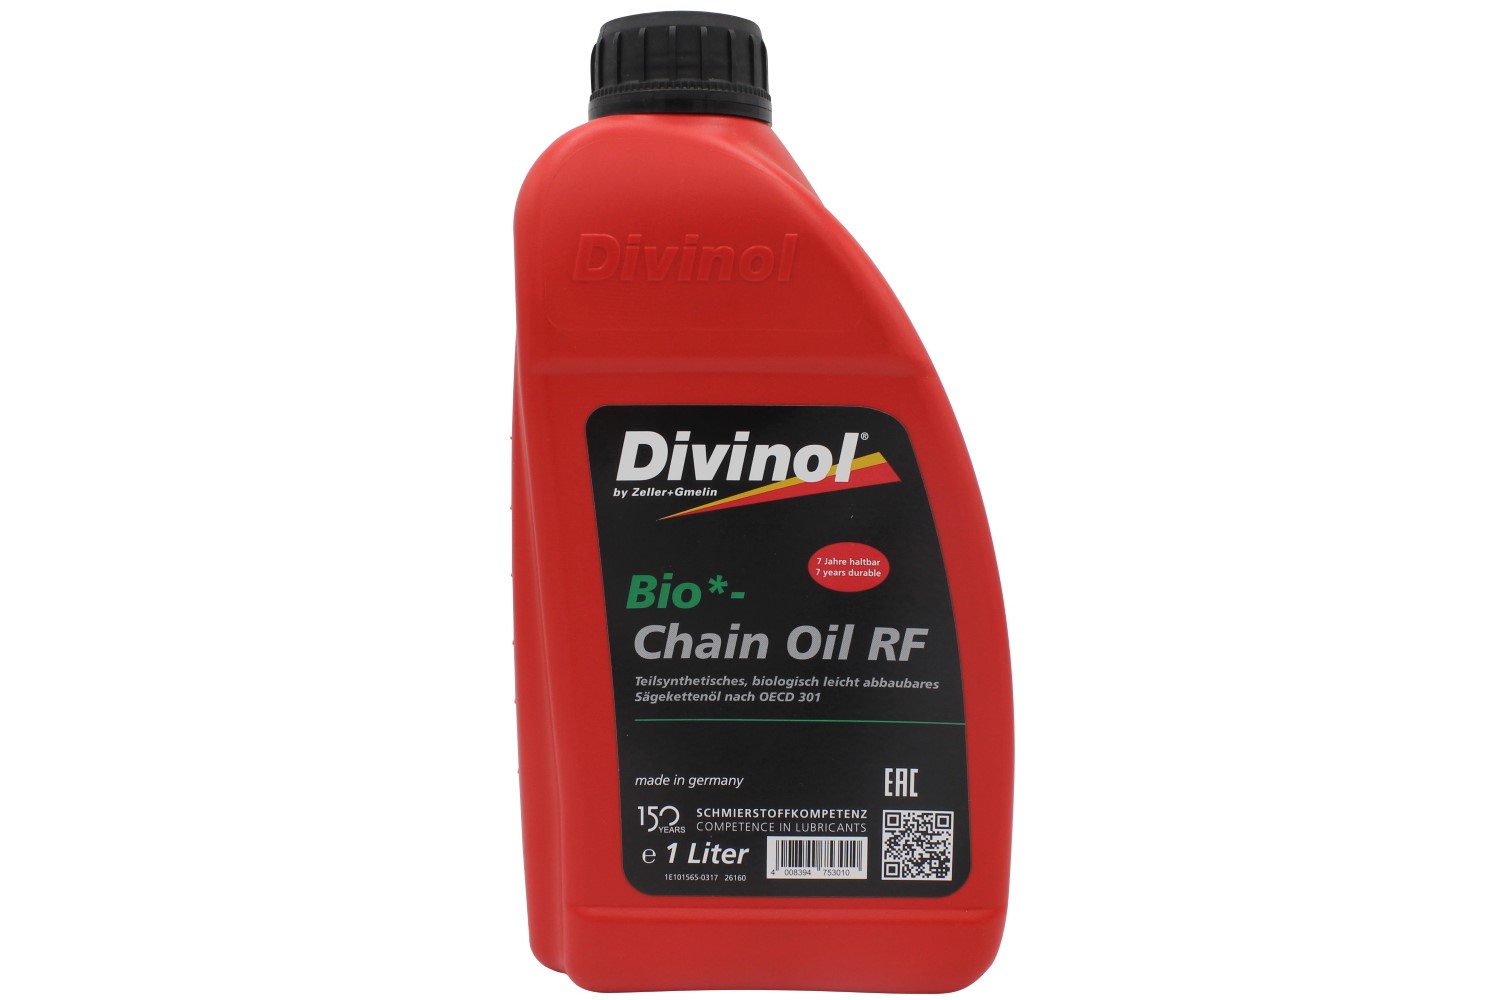 Bio* Kettenöl RF | 1 Liter | Divinol Bio* Chain Oil RF - 1